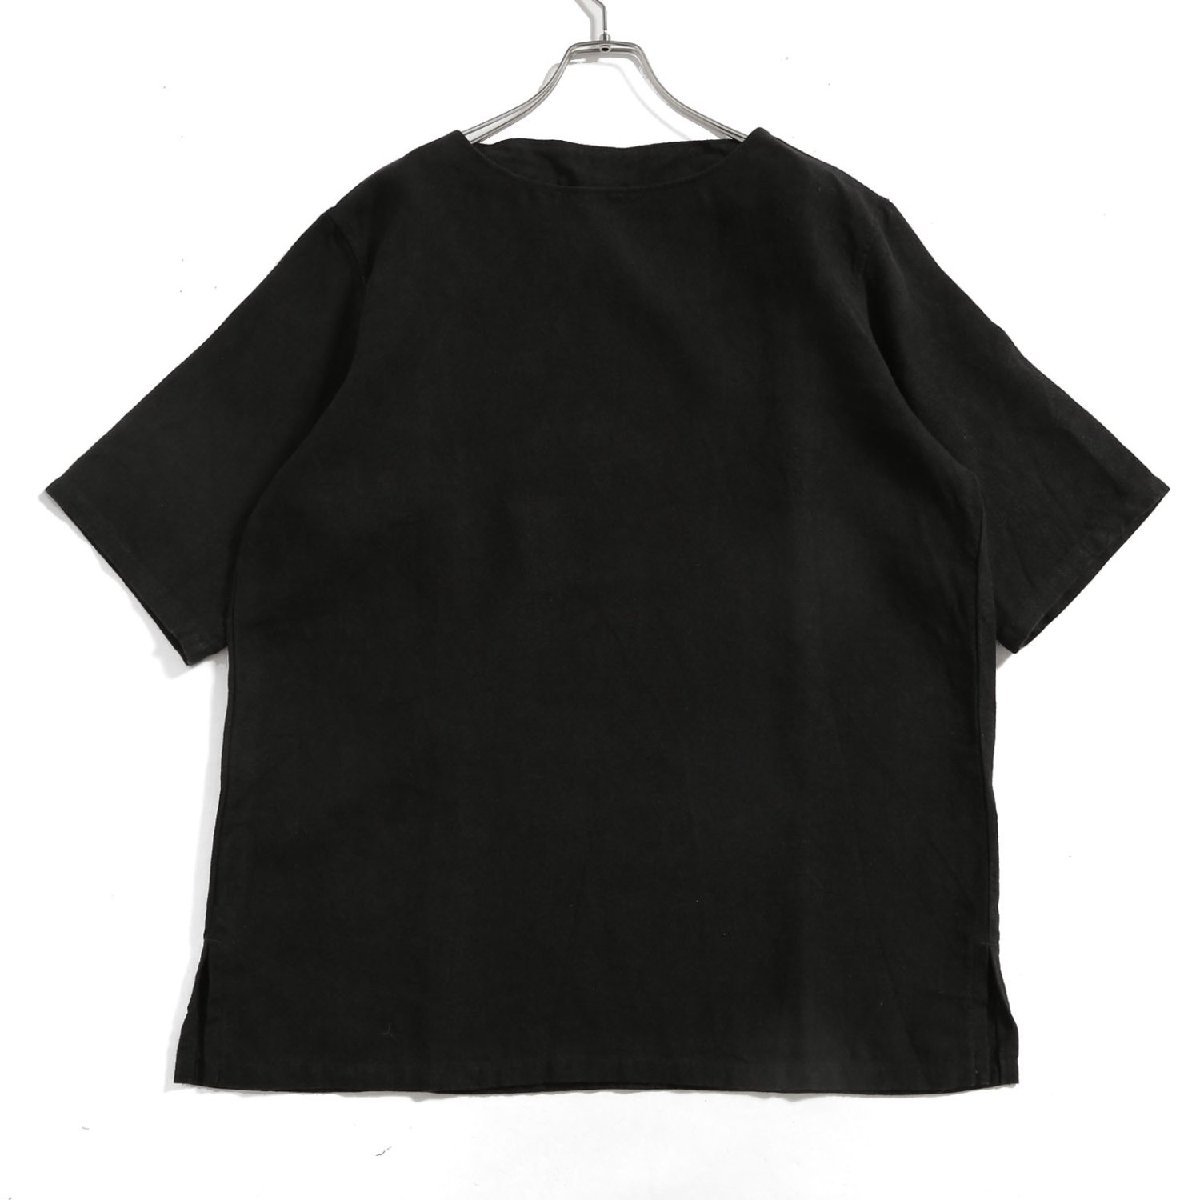 sus-sous / 23SS 美品 sleeping shirts s/s / Belgium linen / size 7 (BLACK) シュスー シャツ